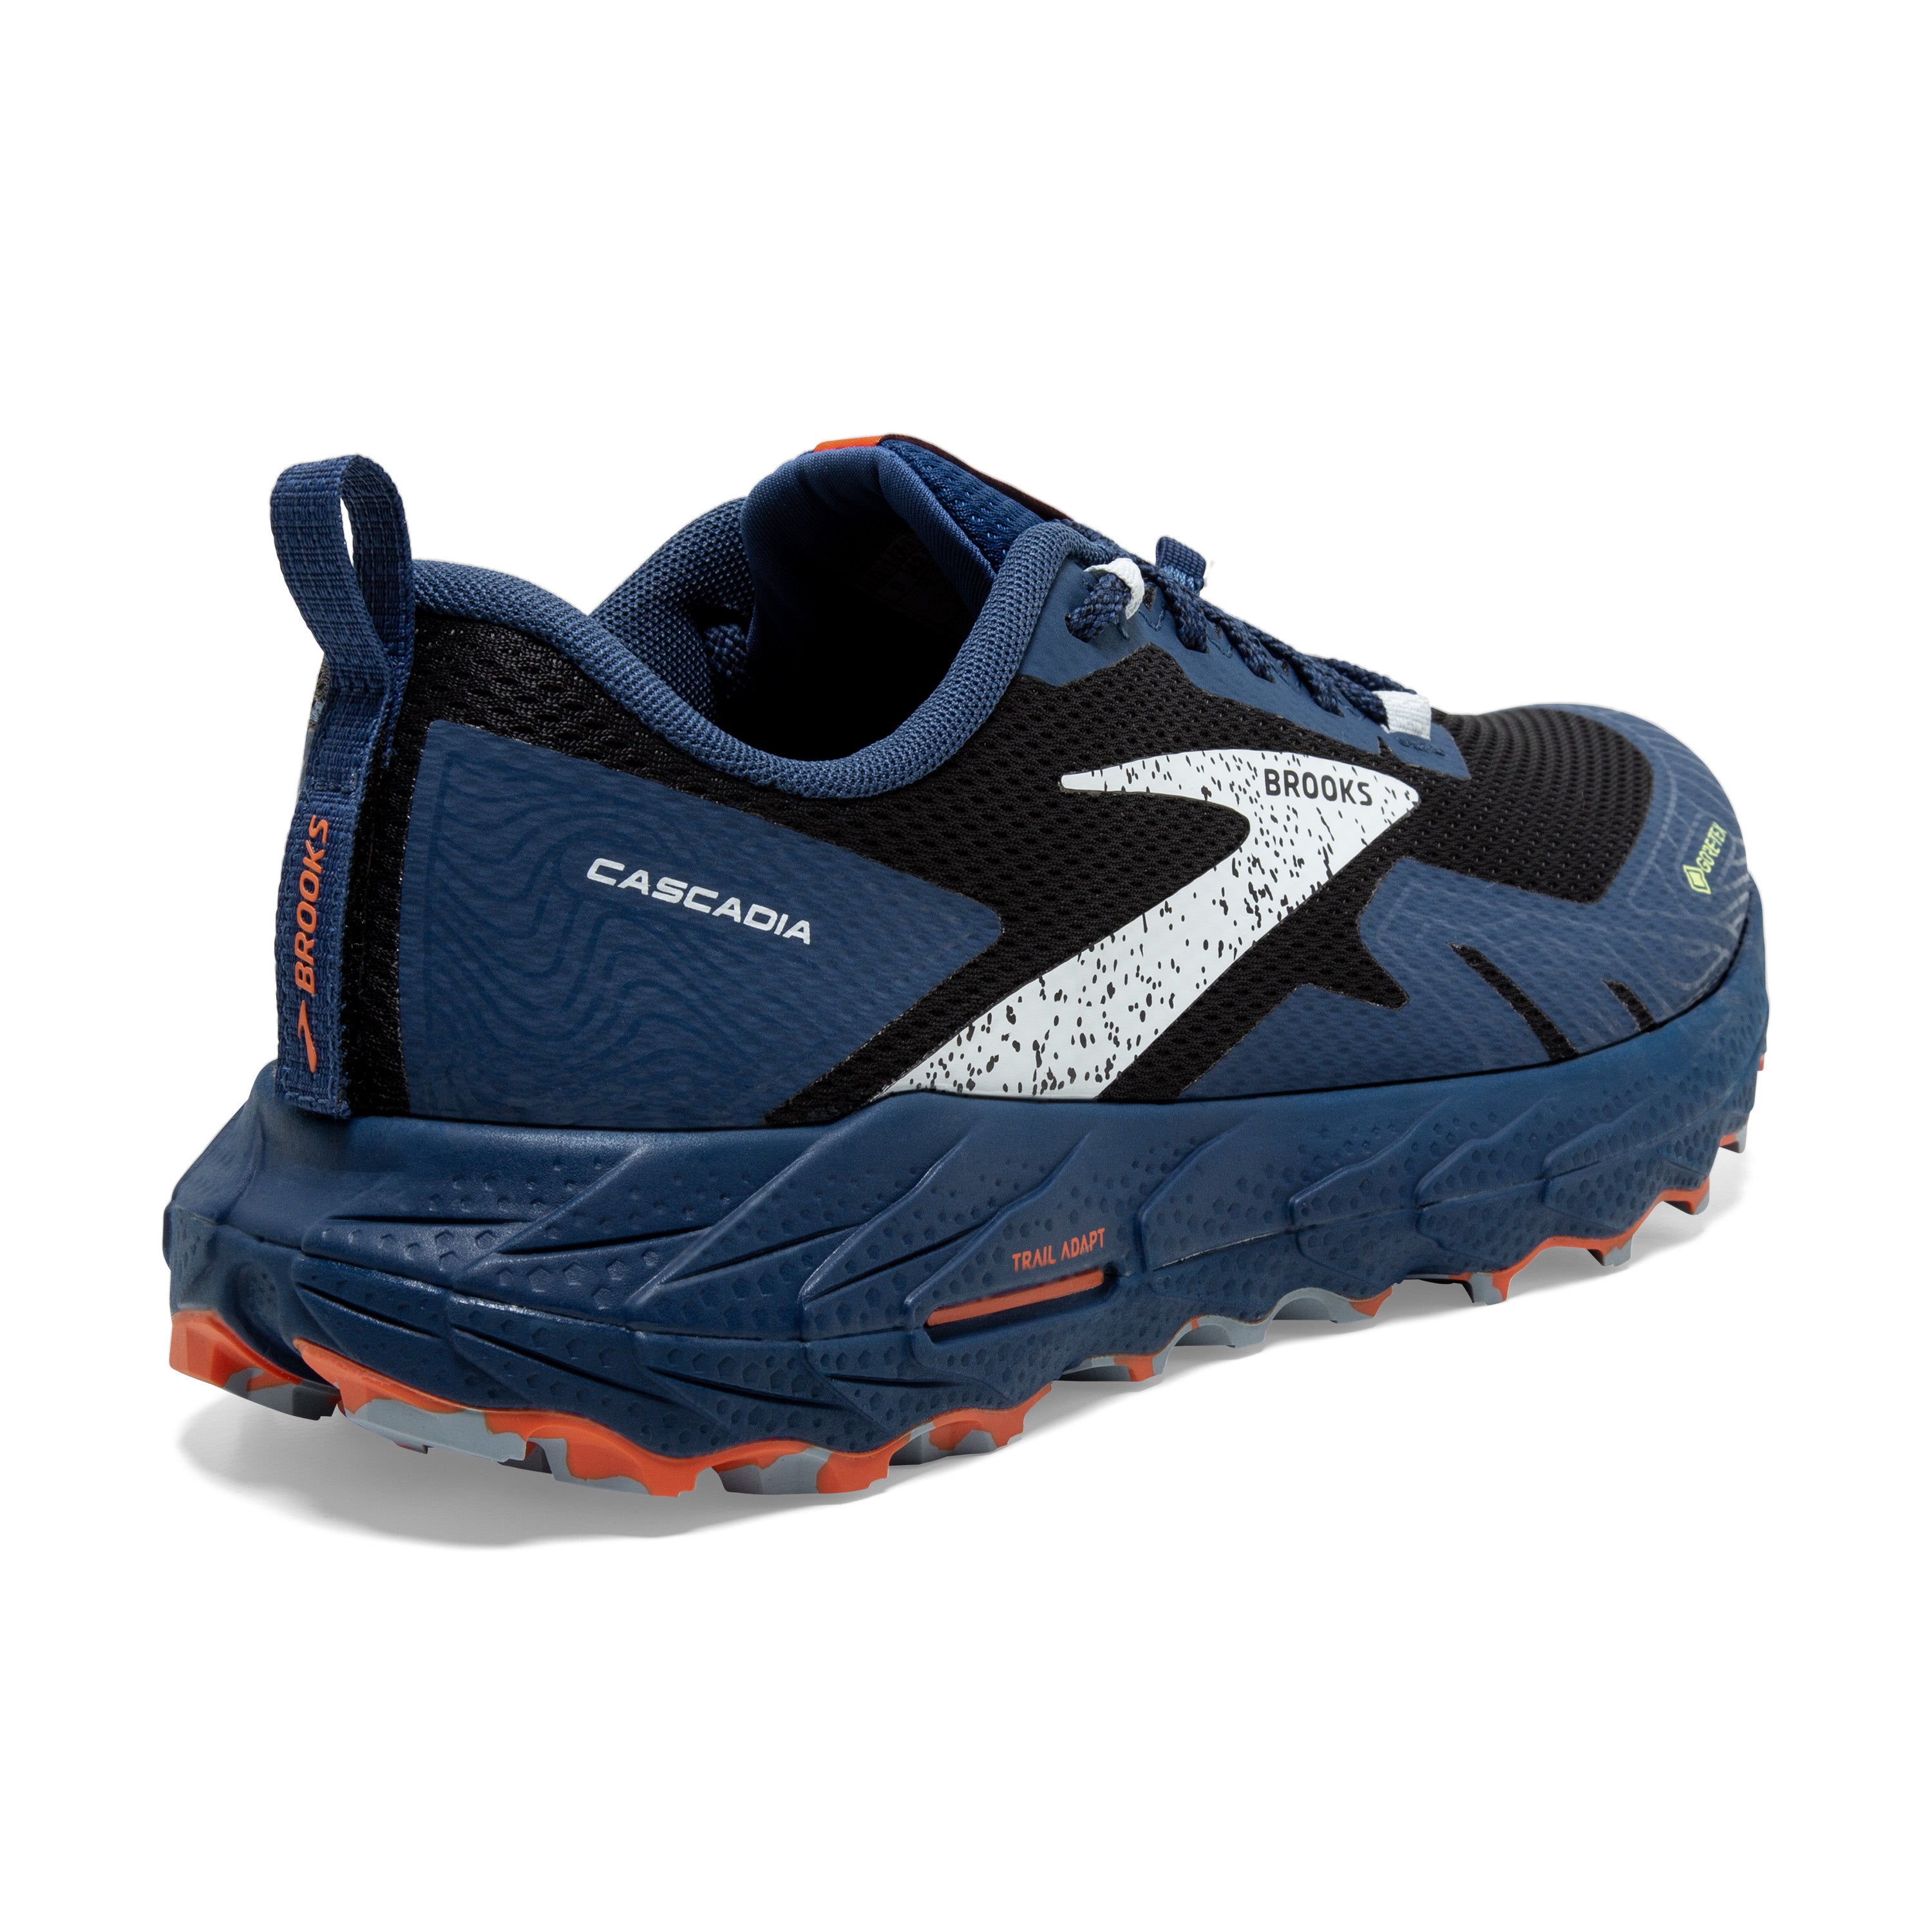 Cascadia 17 GTX - Men's Trail Running Shoes